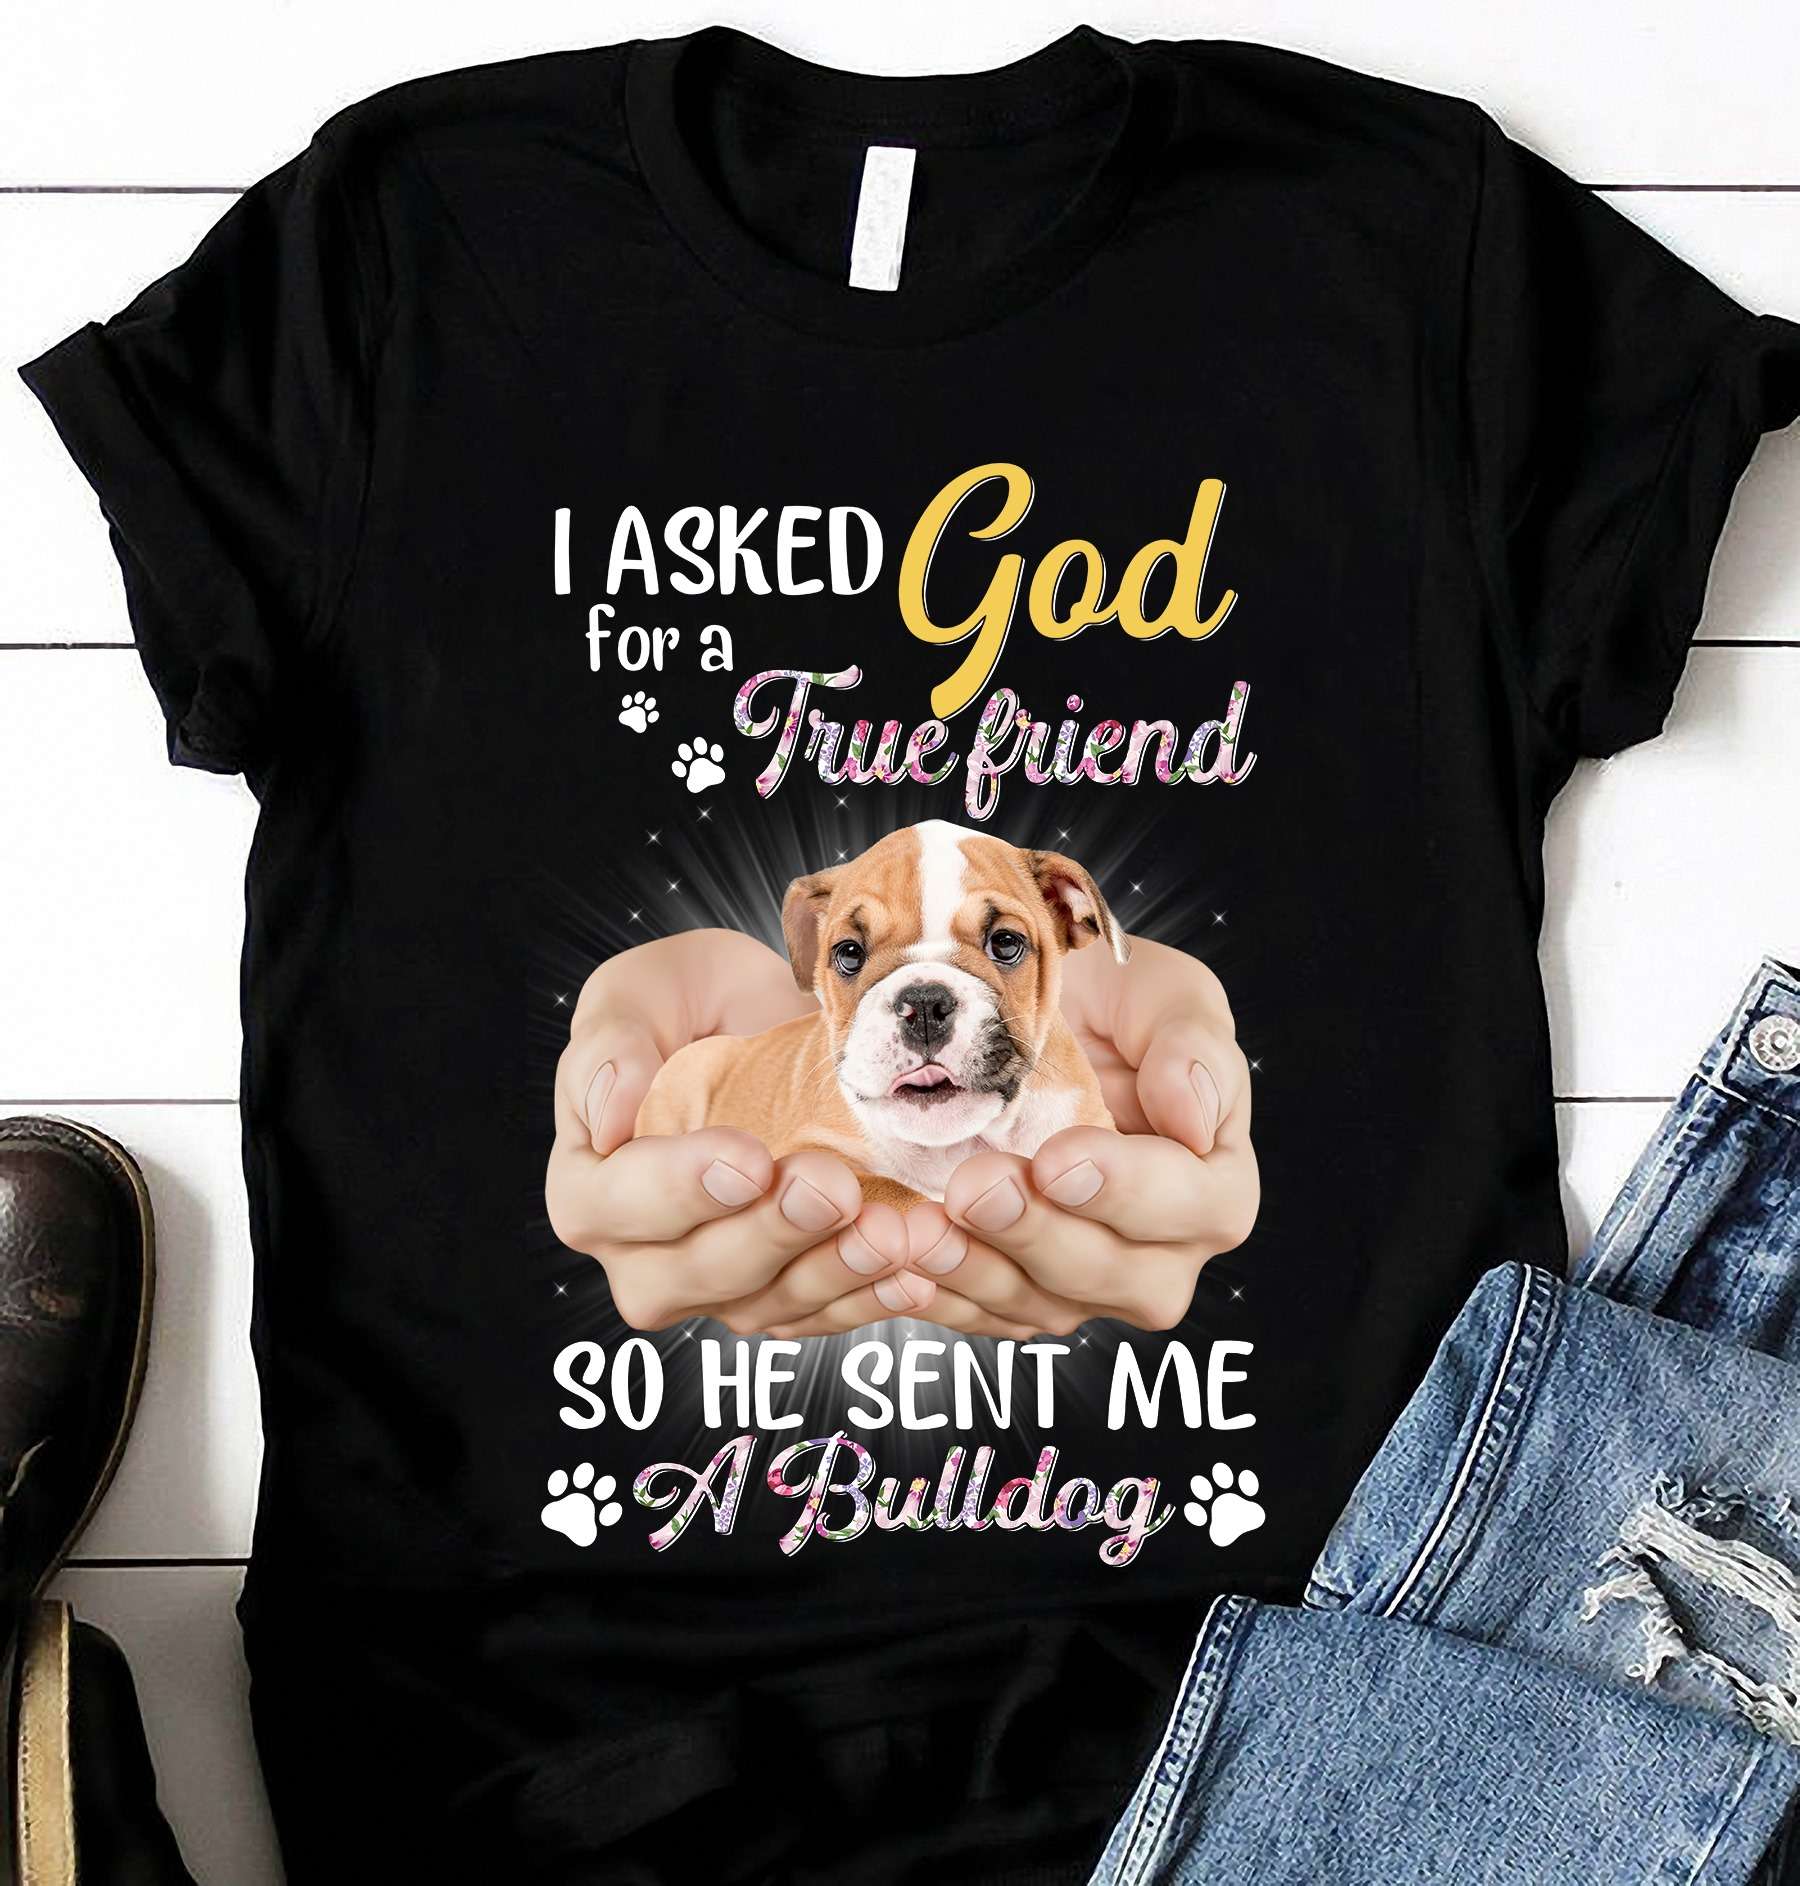 God's Bulldog - I asked god for a true friend so he sent me a bulldog